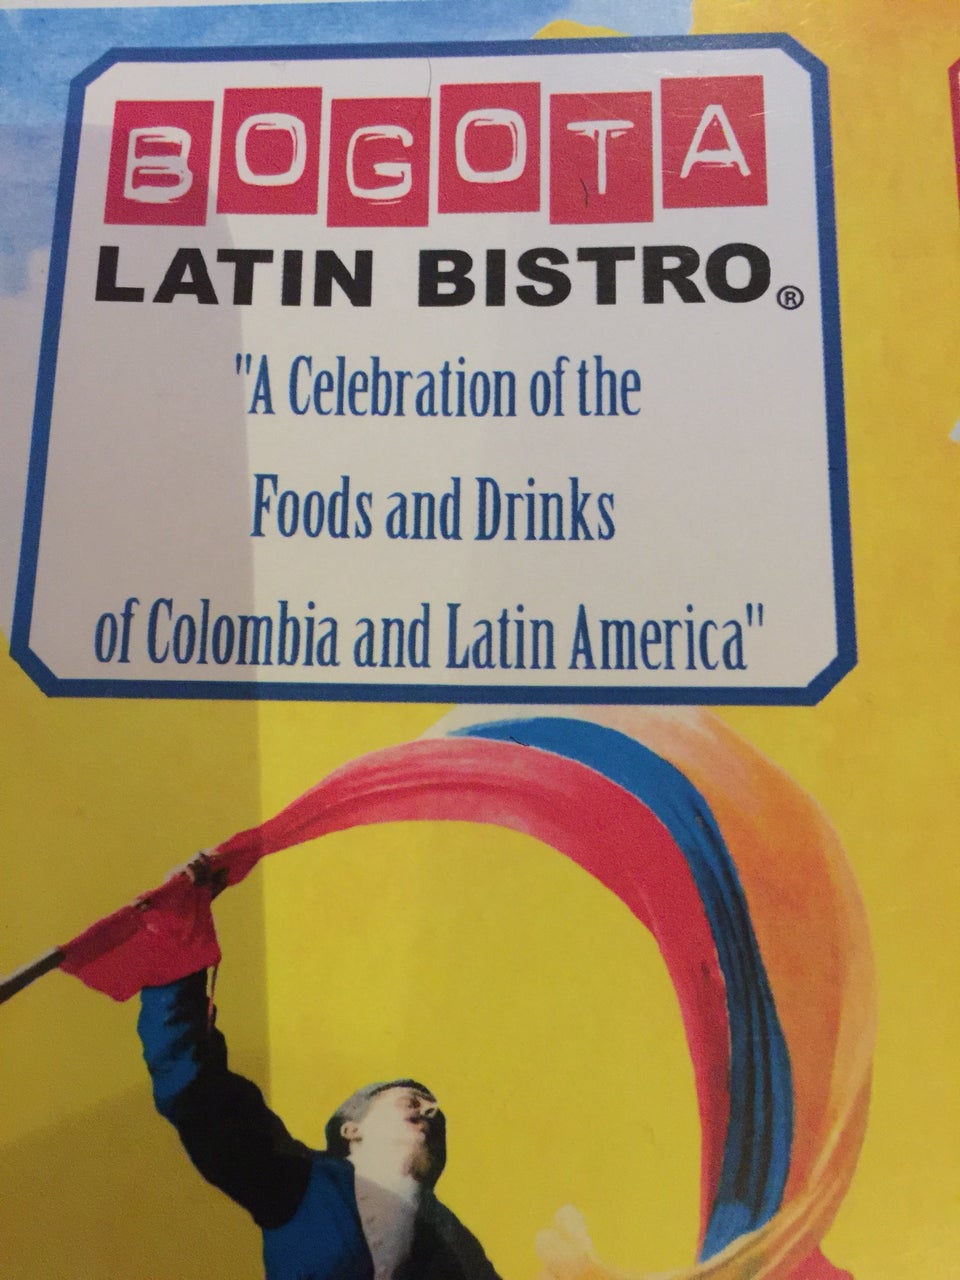 Photo of Bogota Latin Bistro